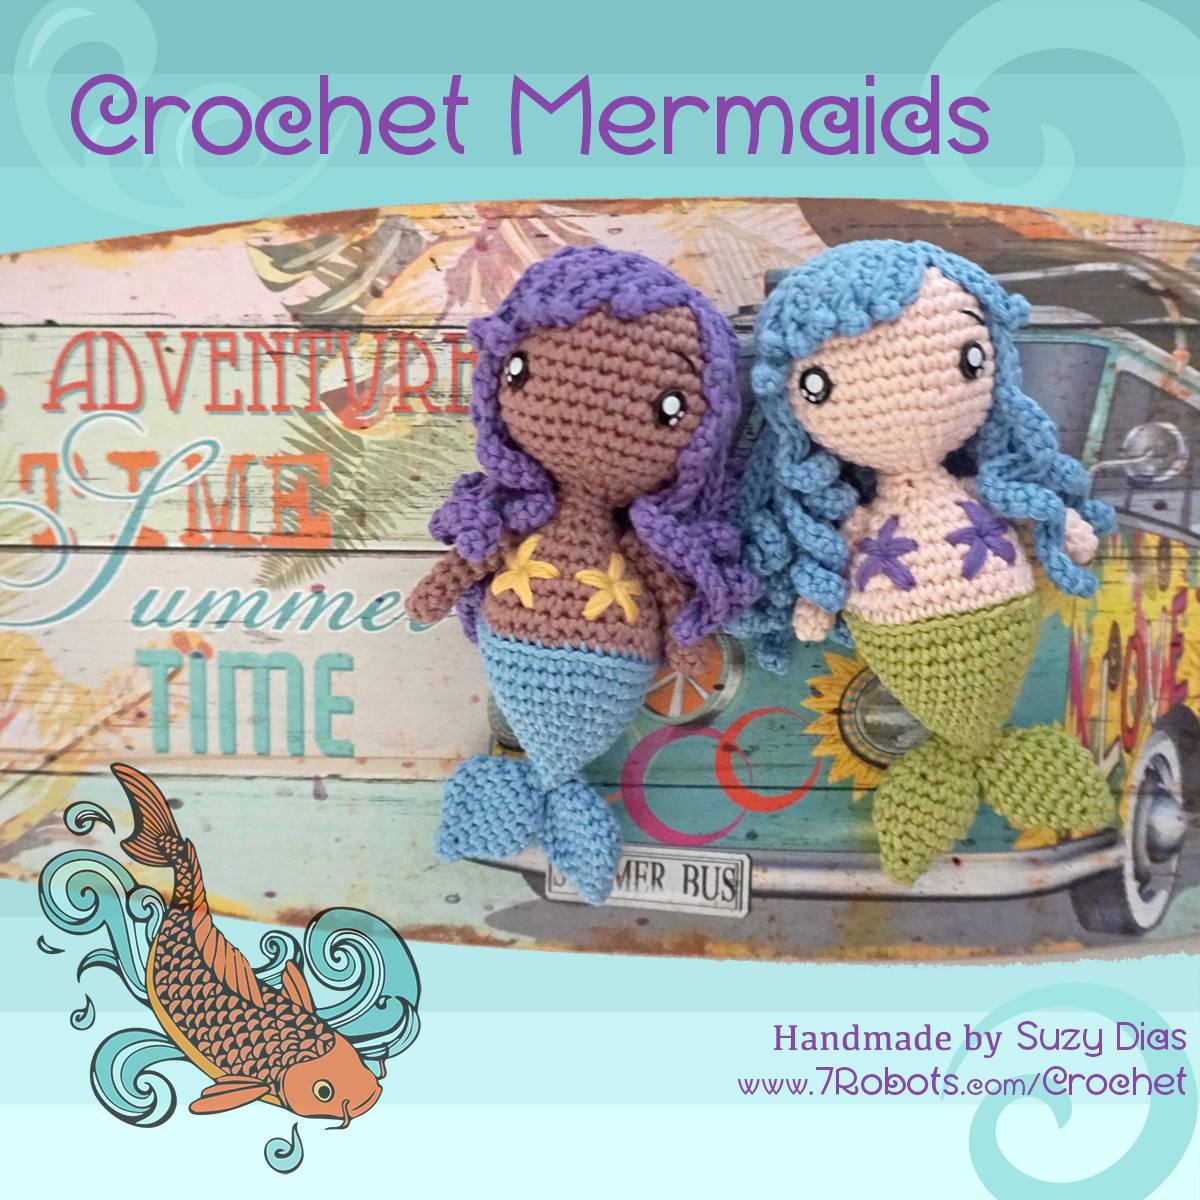 I was in a #mermaid mood🌊so here’s my little #crochetmermaid🐠. I hope I got a cute kawaii vibe. #crochet by #suzydias

#amigurumi #surfer #summer #skateboard #beach #crochettoys #ganchillo #crochê #örgü #virku #uncinetto #yarnaddict #haken #häkeln #handmade